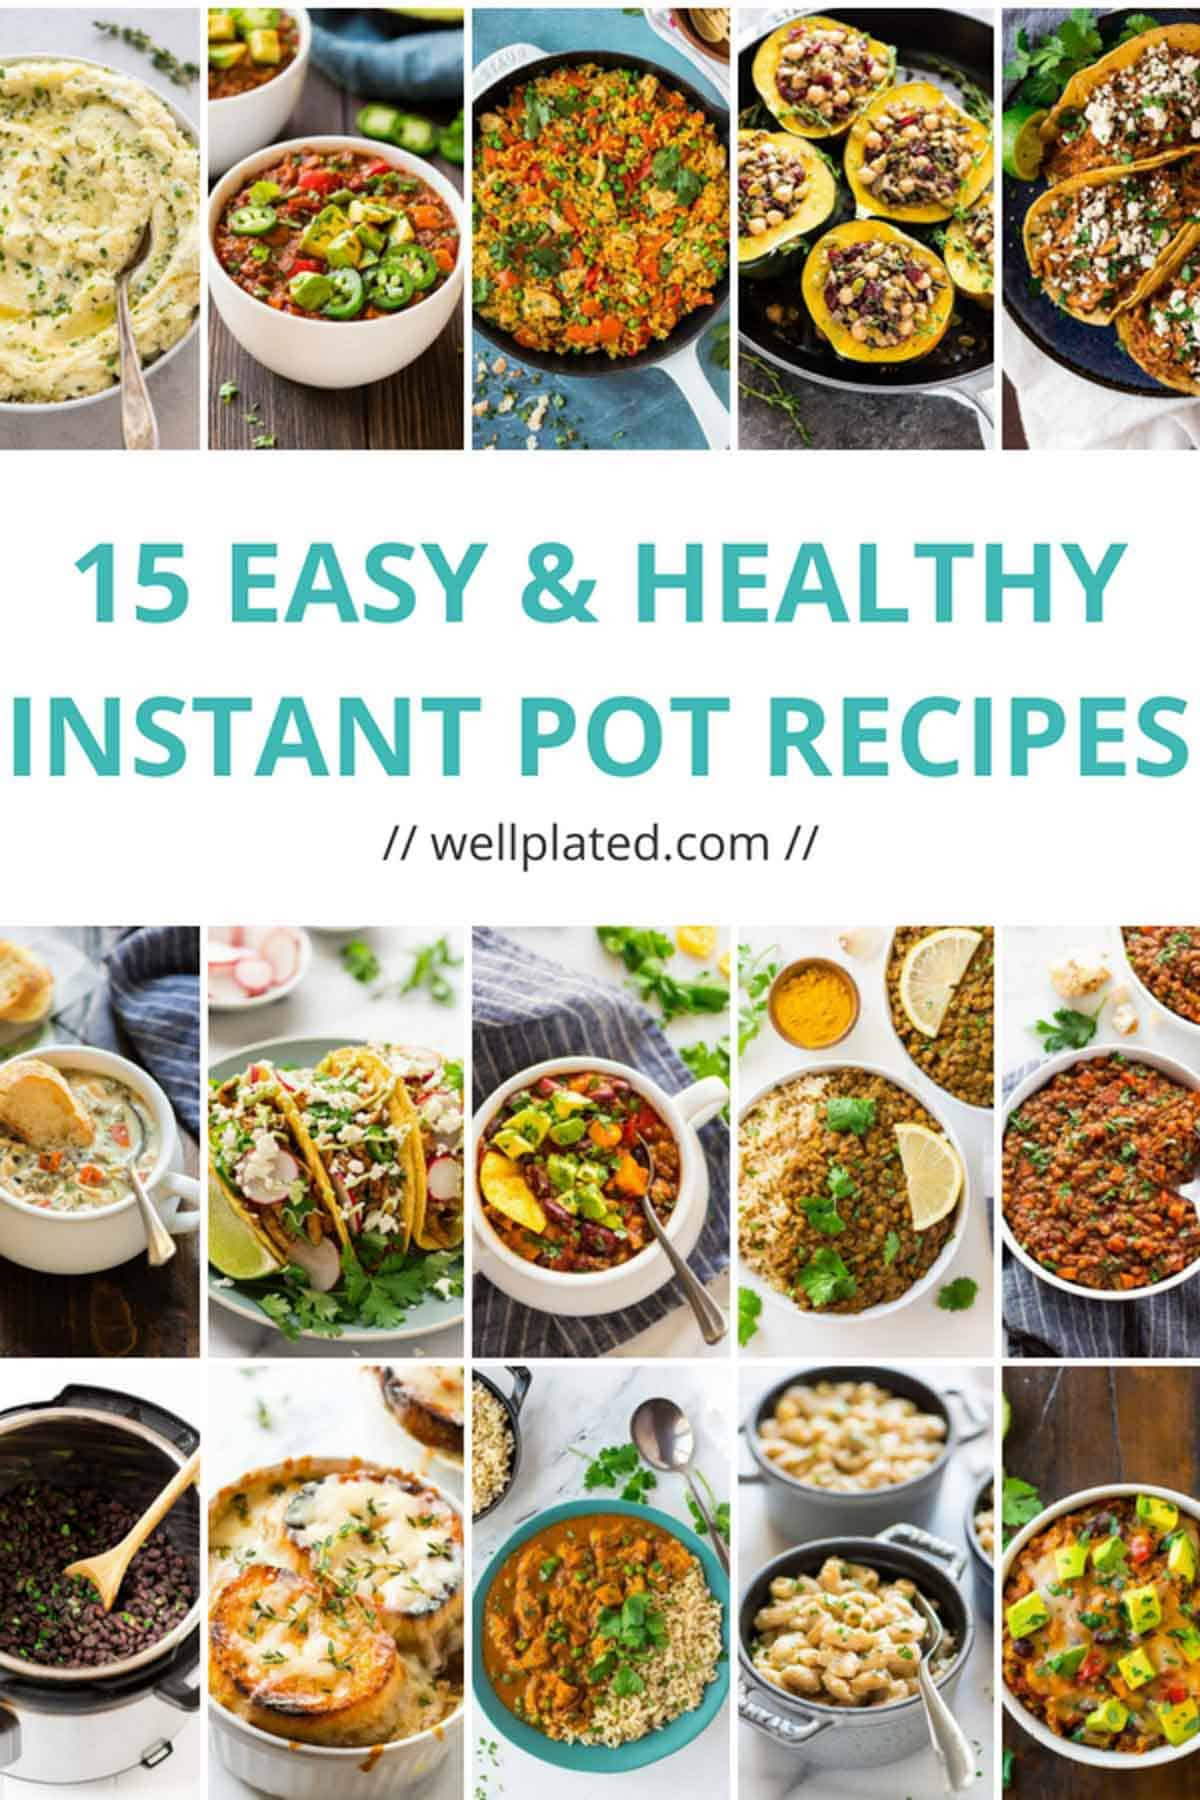 Instant Pot Simple Recipes
 Healthy Instant Pot Recipes That Anyone Can Make